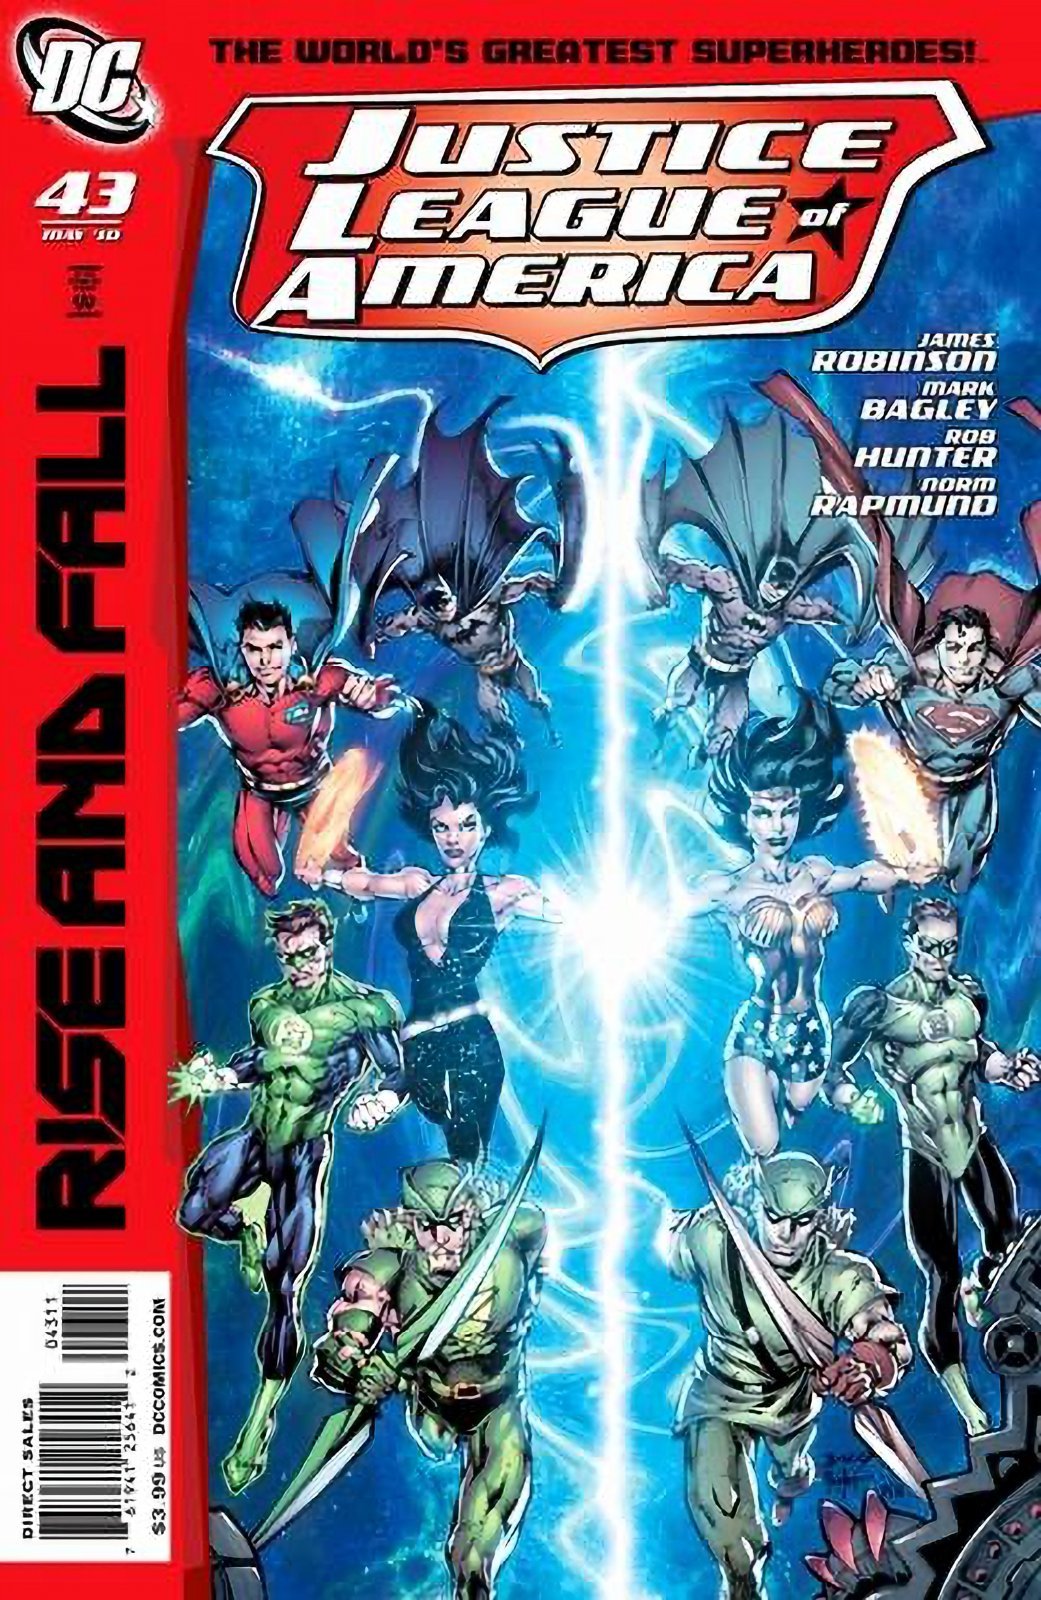 Justice League of America #43 (2006-2011) DC Comics